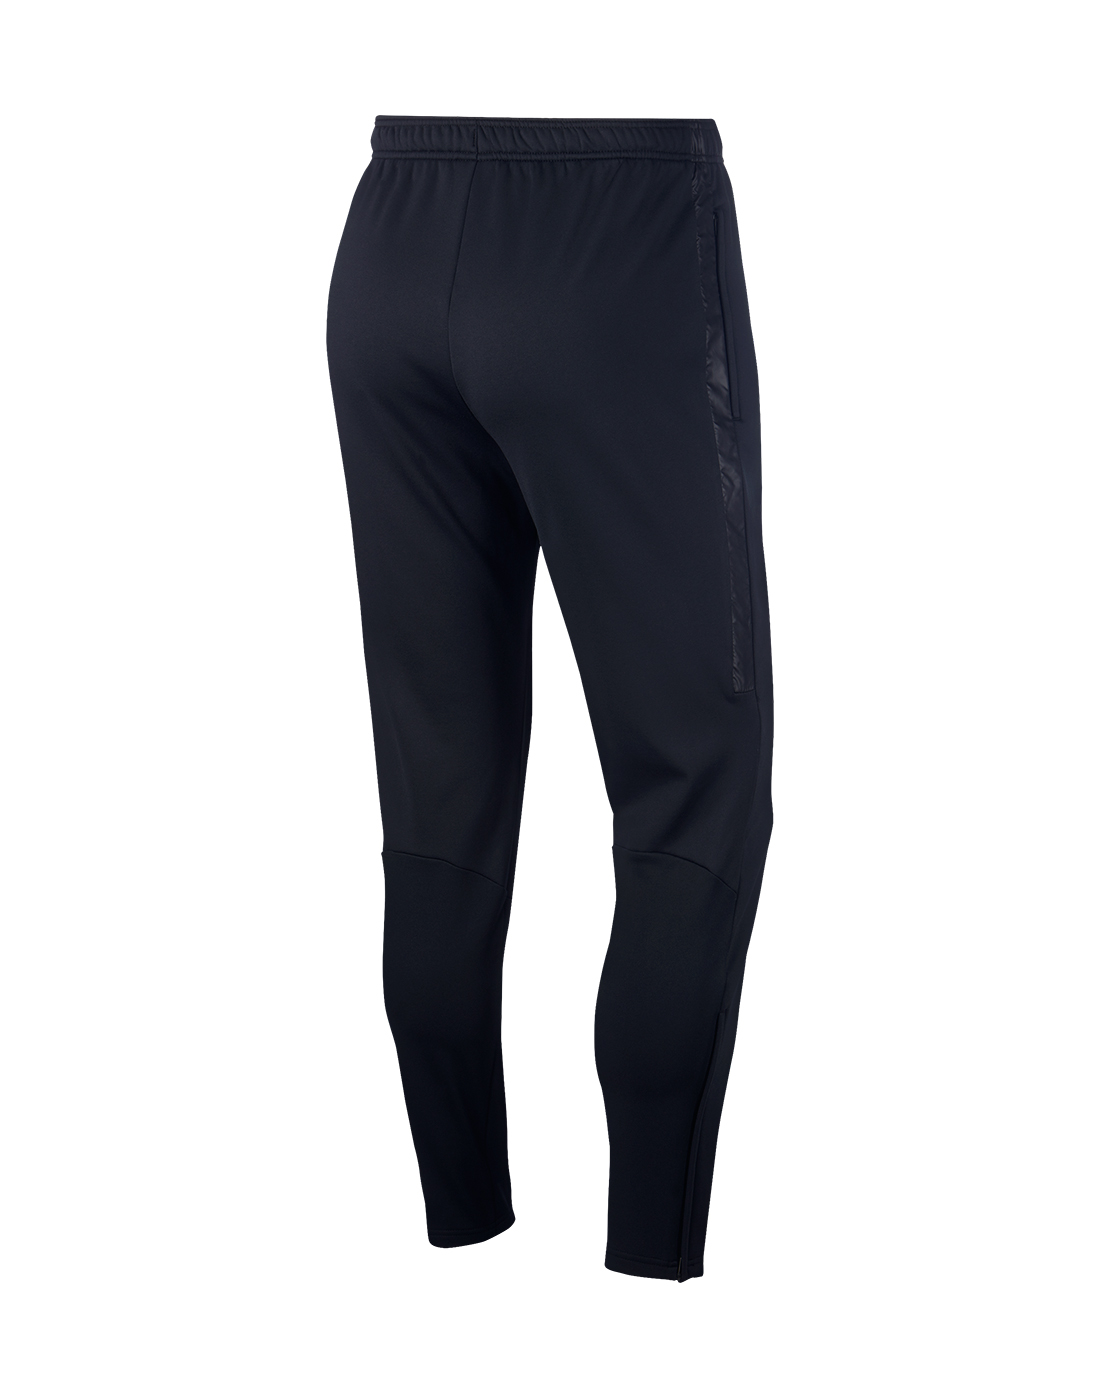 Nike Mens Academy Thermal Pant - Black | Life Style Sports UK